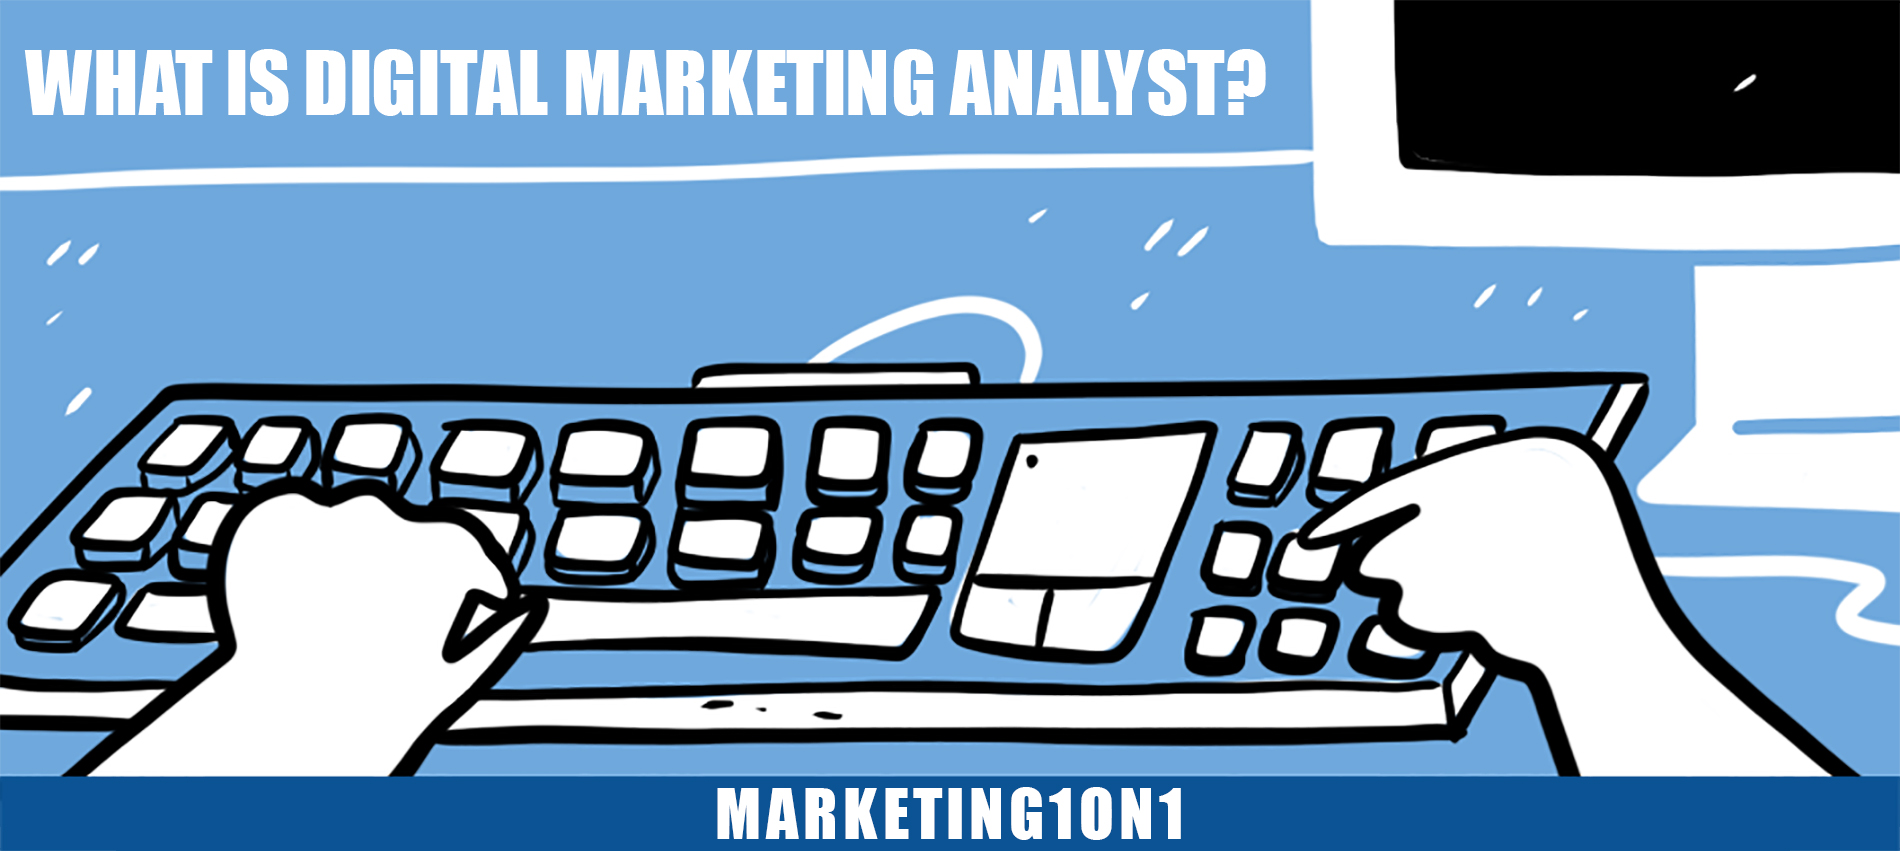 What is digital marketing analyst?